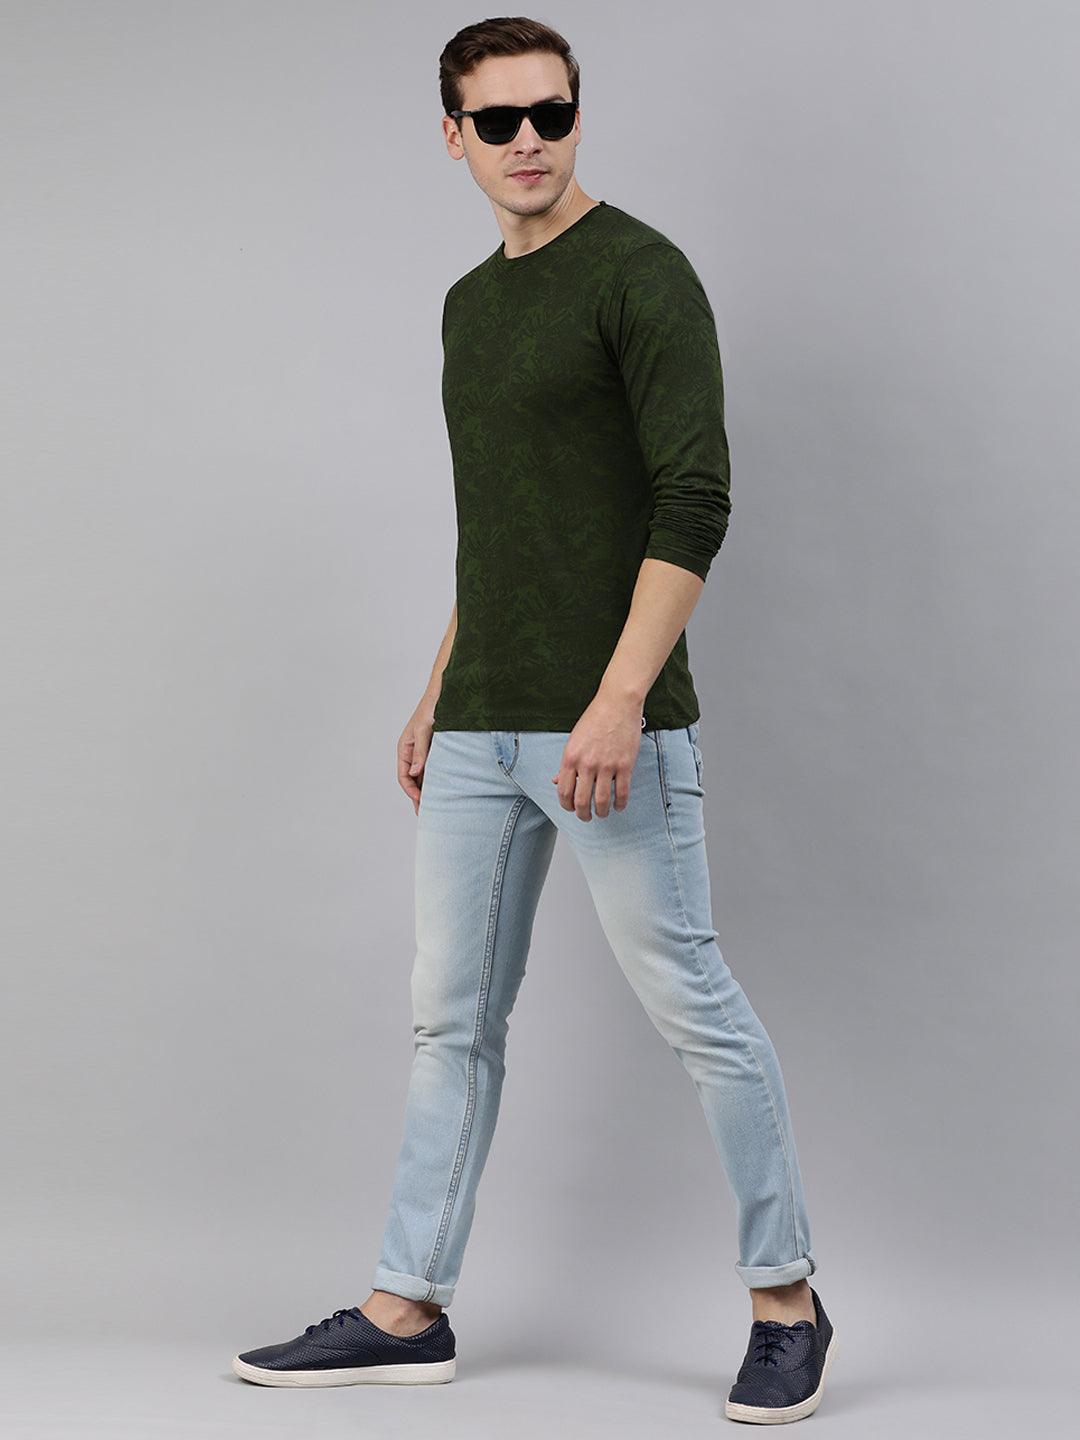 Urbano Fashion Men's Olive Green Printed Full Sleeve Slim Fit Cotton T-Shirt